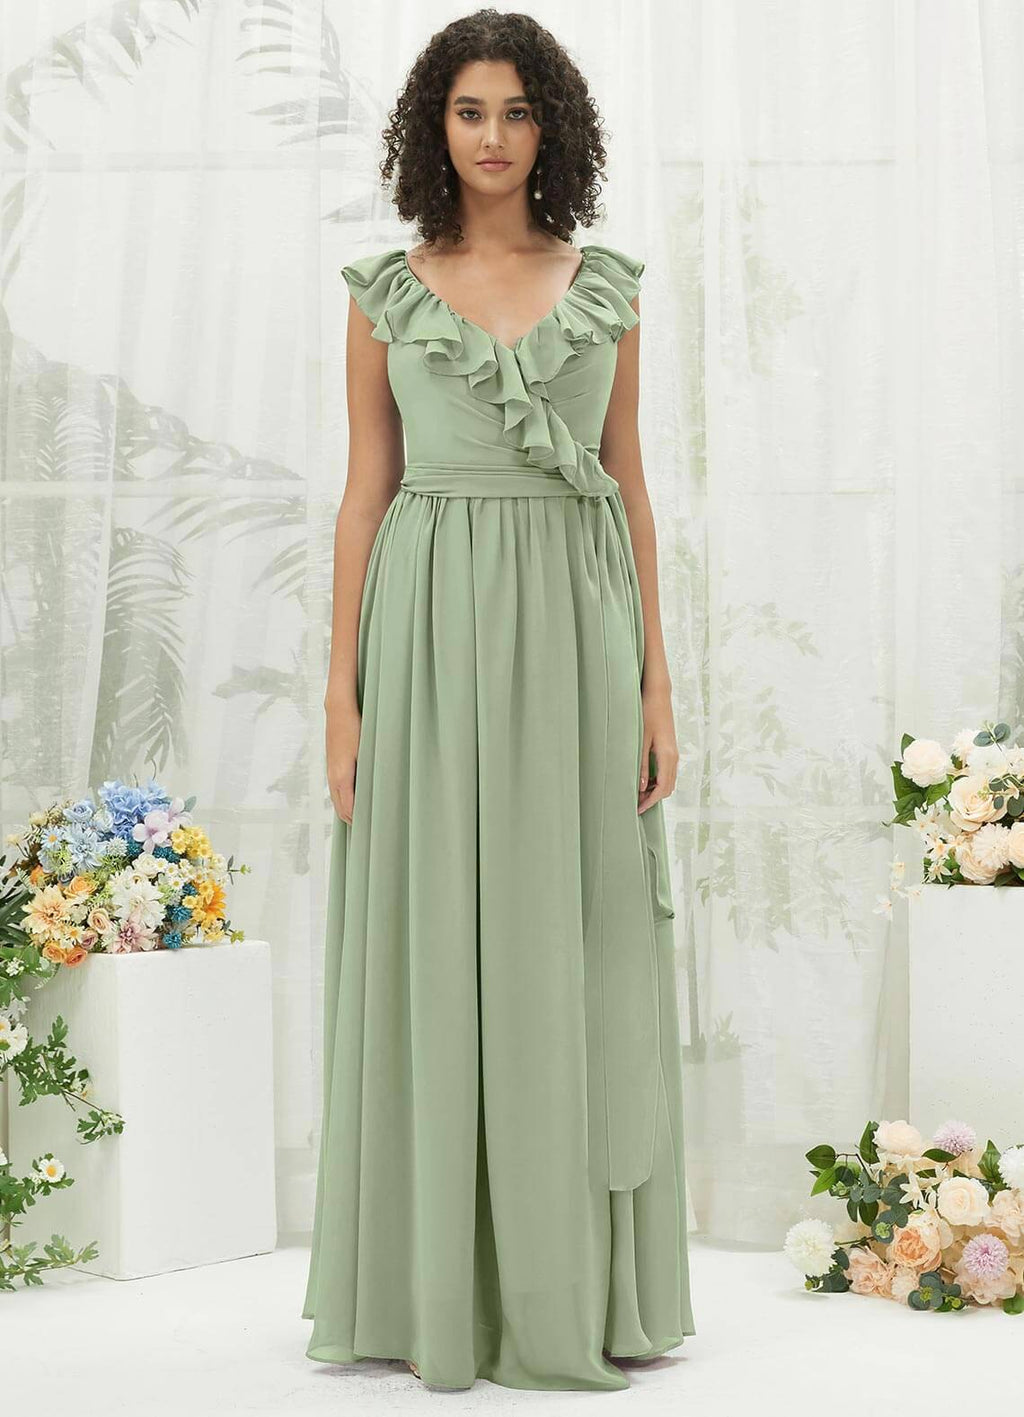 NZ Bridal Sage Green Wrap Chiffon Maxi Bridesmaid Dress R3702 Valerie a